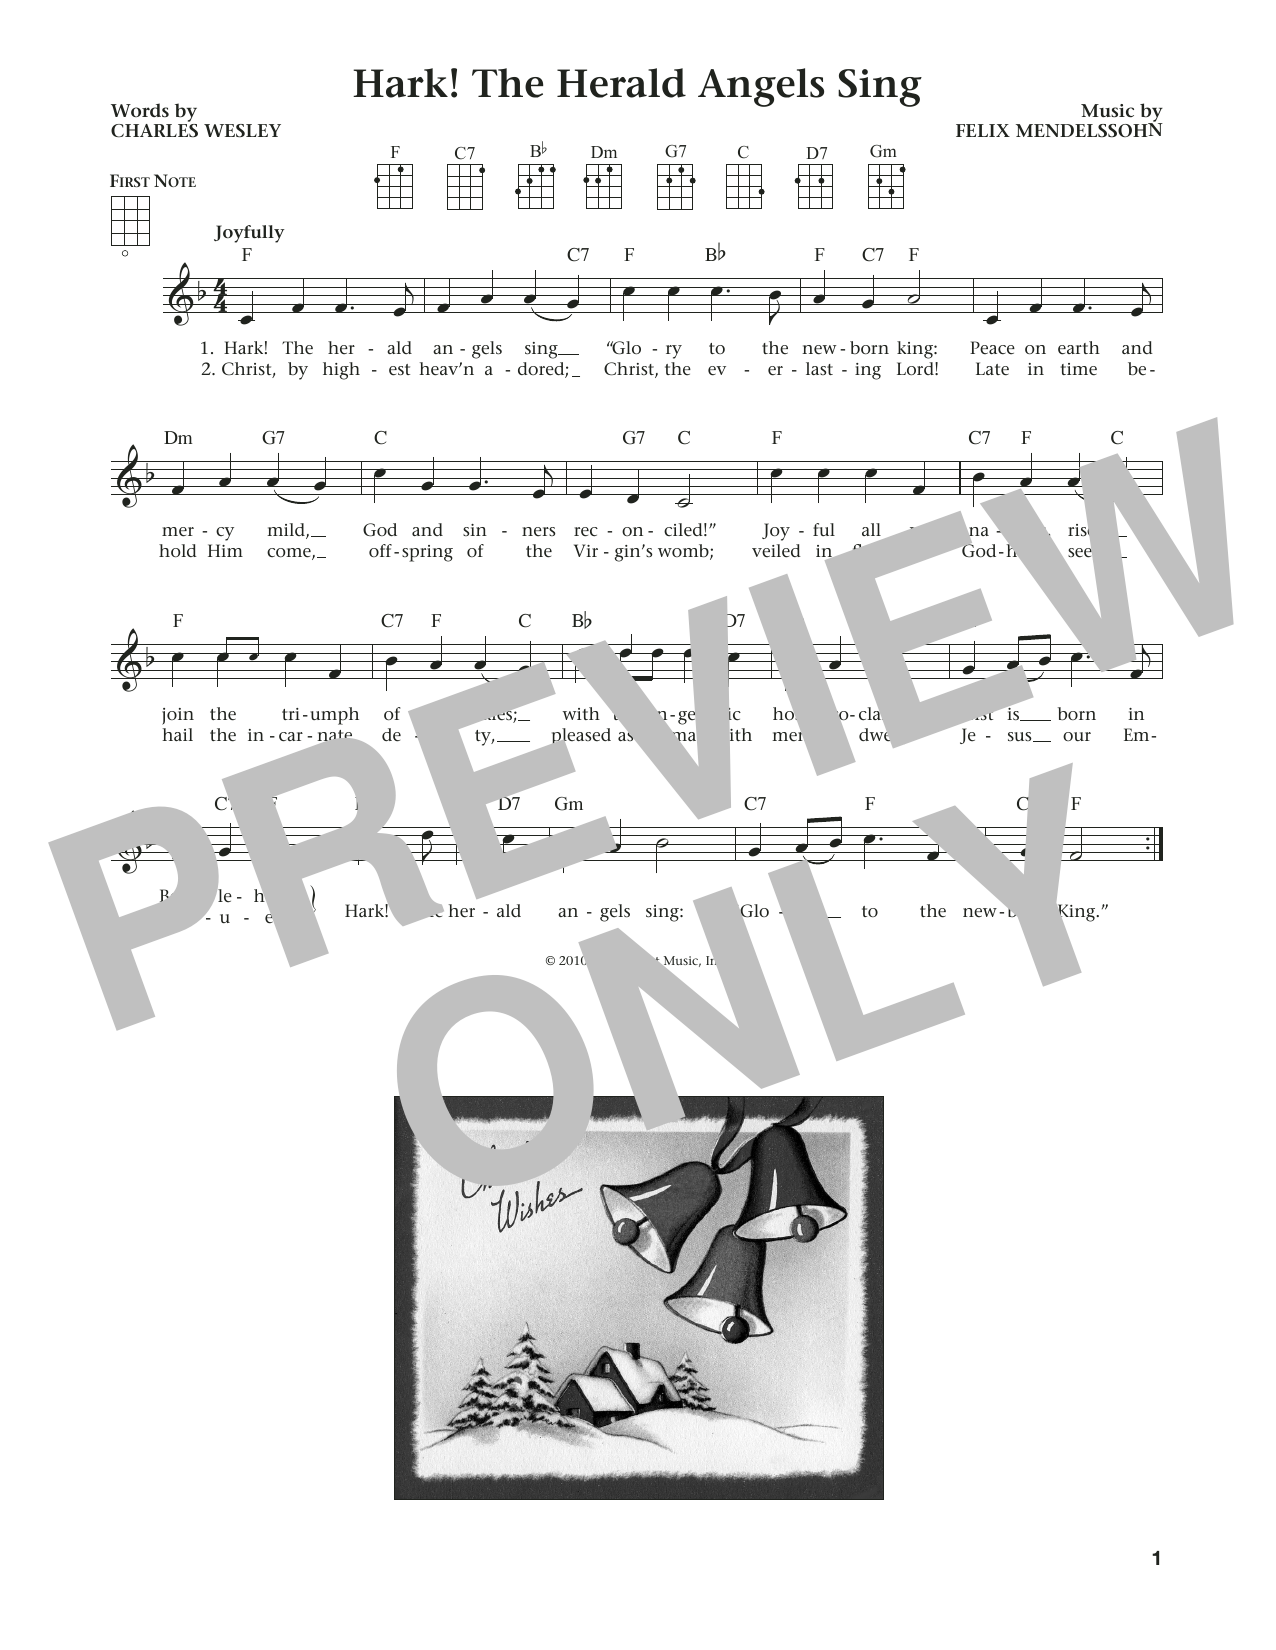 Felix Mendelssohn-Bartholdy Hark! The Herald Angels Sing (from The Daily Ukulele) (arr. Liz and Jim Beloff) Sheet Music Notes & Chords for Ukulele - Download or Print PDF